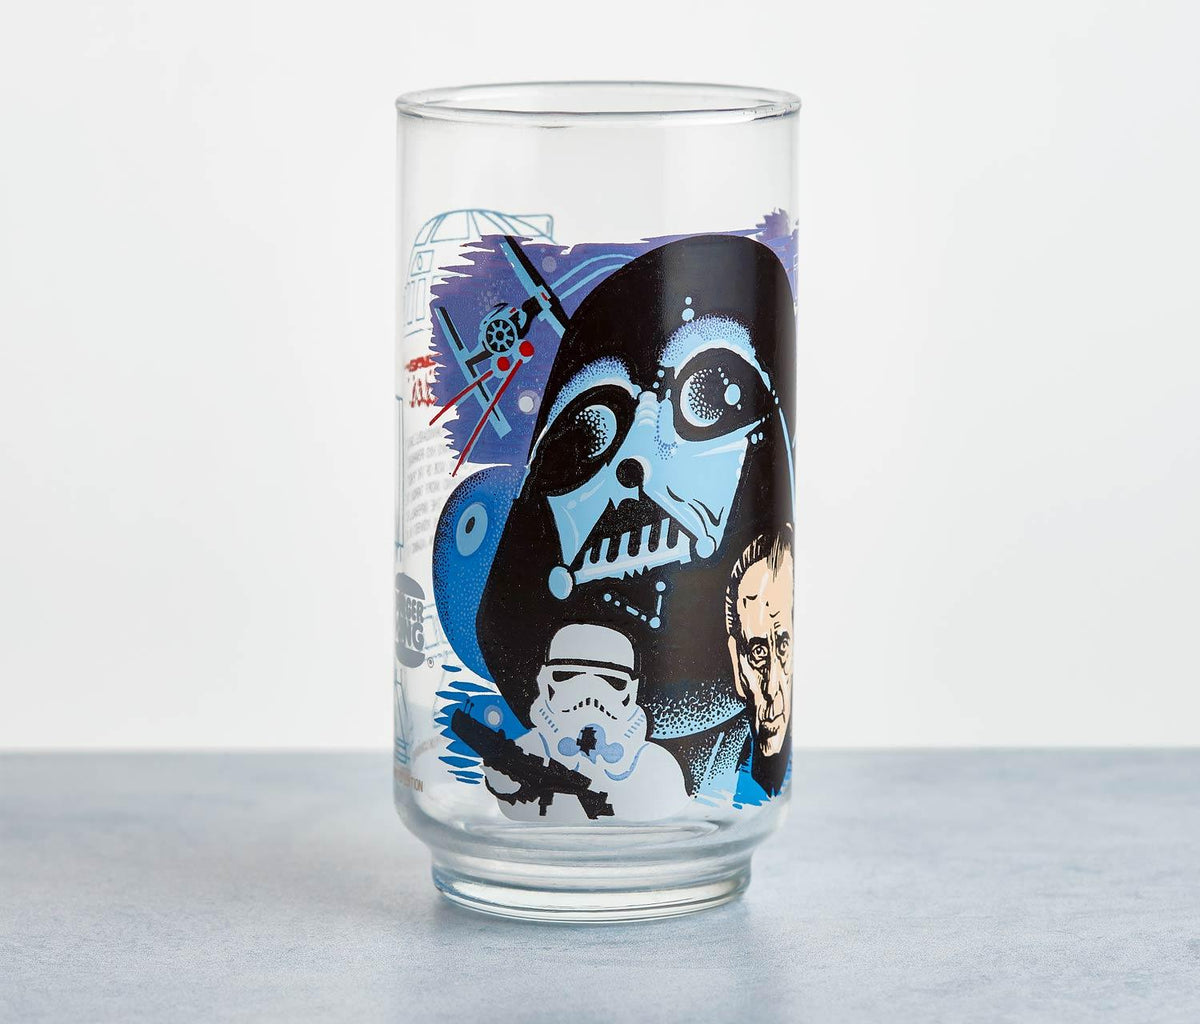 Star Wars / Darth Vader / Death Star / Sandblasting Glass / 